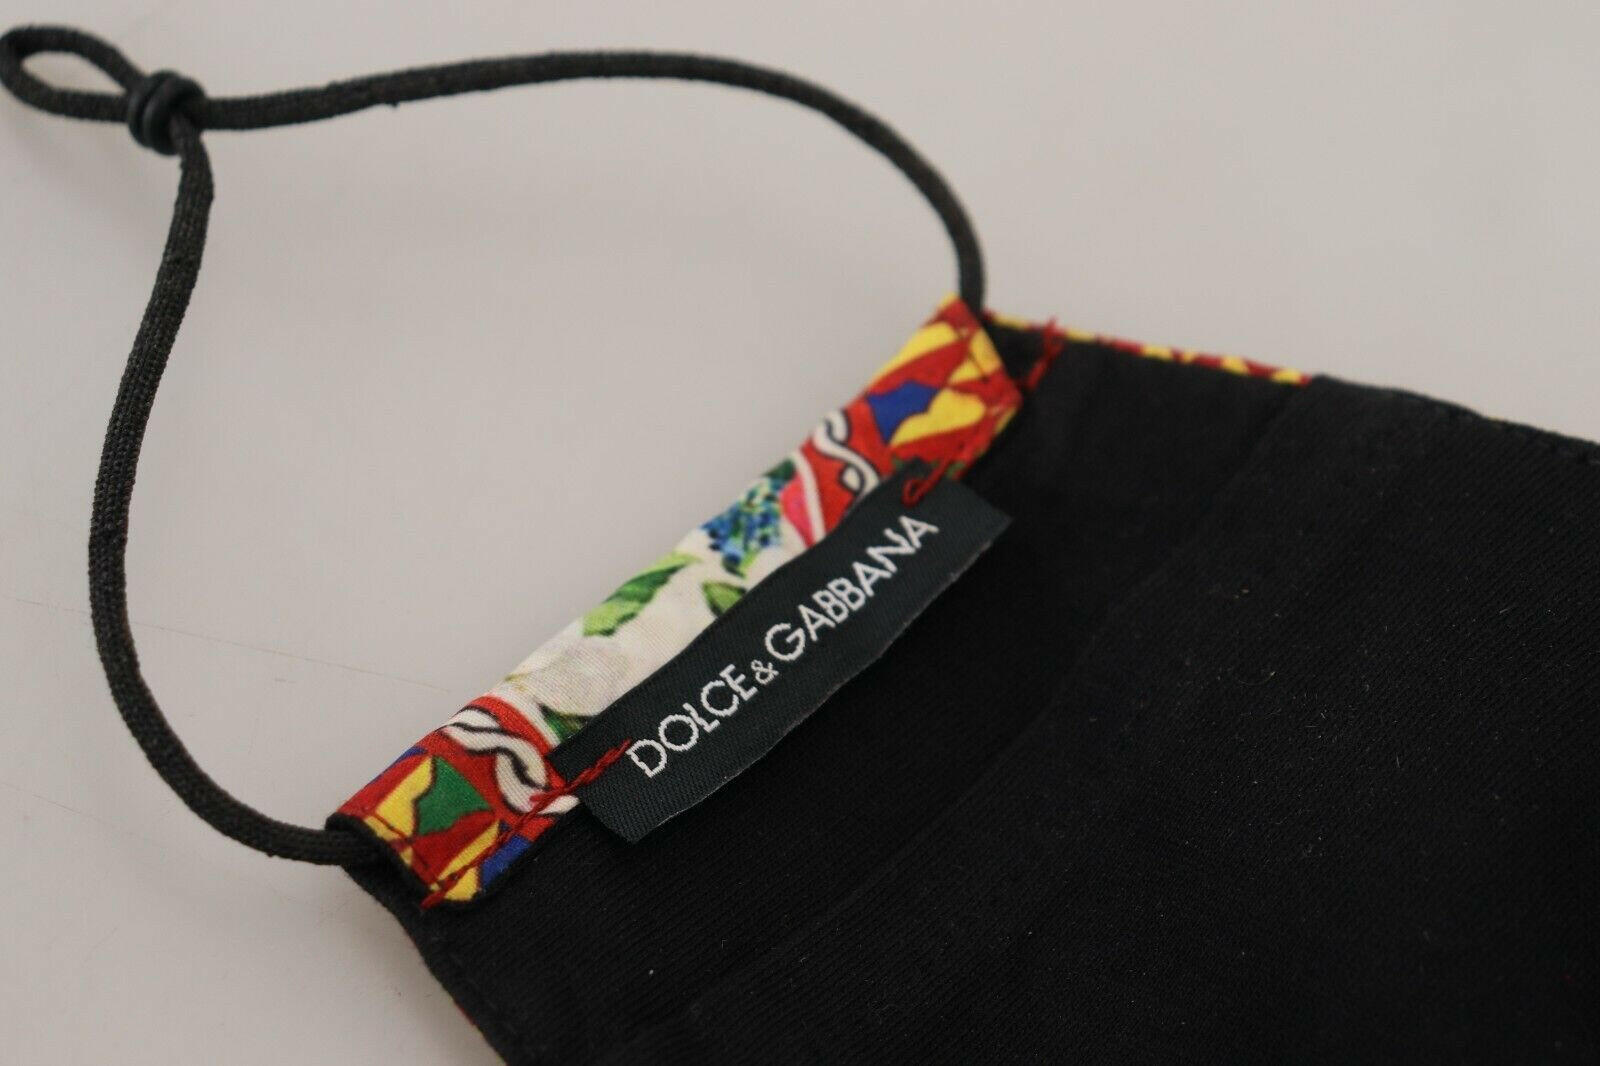 Dolce & Gabbana Multicolor Leopard Floral Elastic Ear Strap Face Mask - GENUINE AUTHENTIC BRAND LLC  